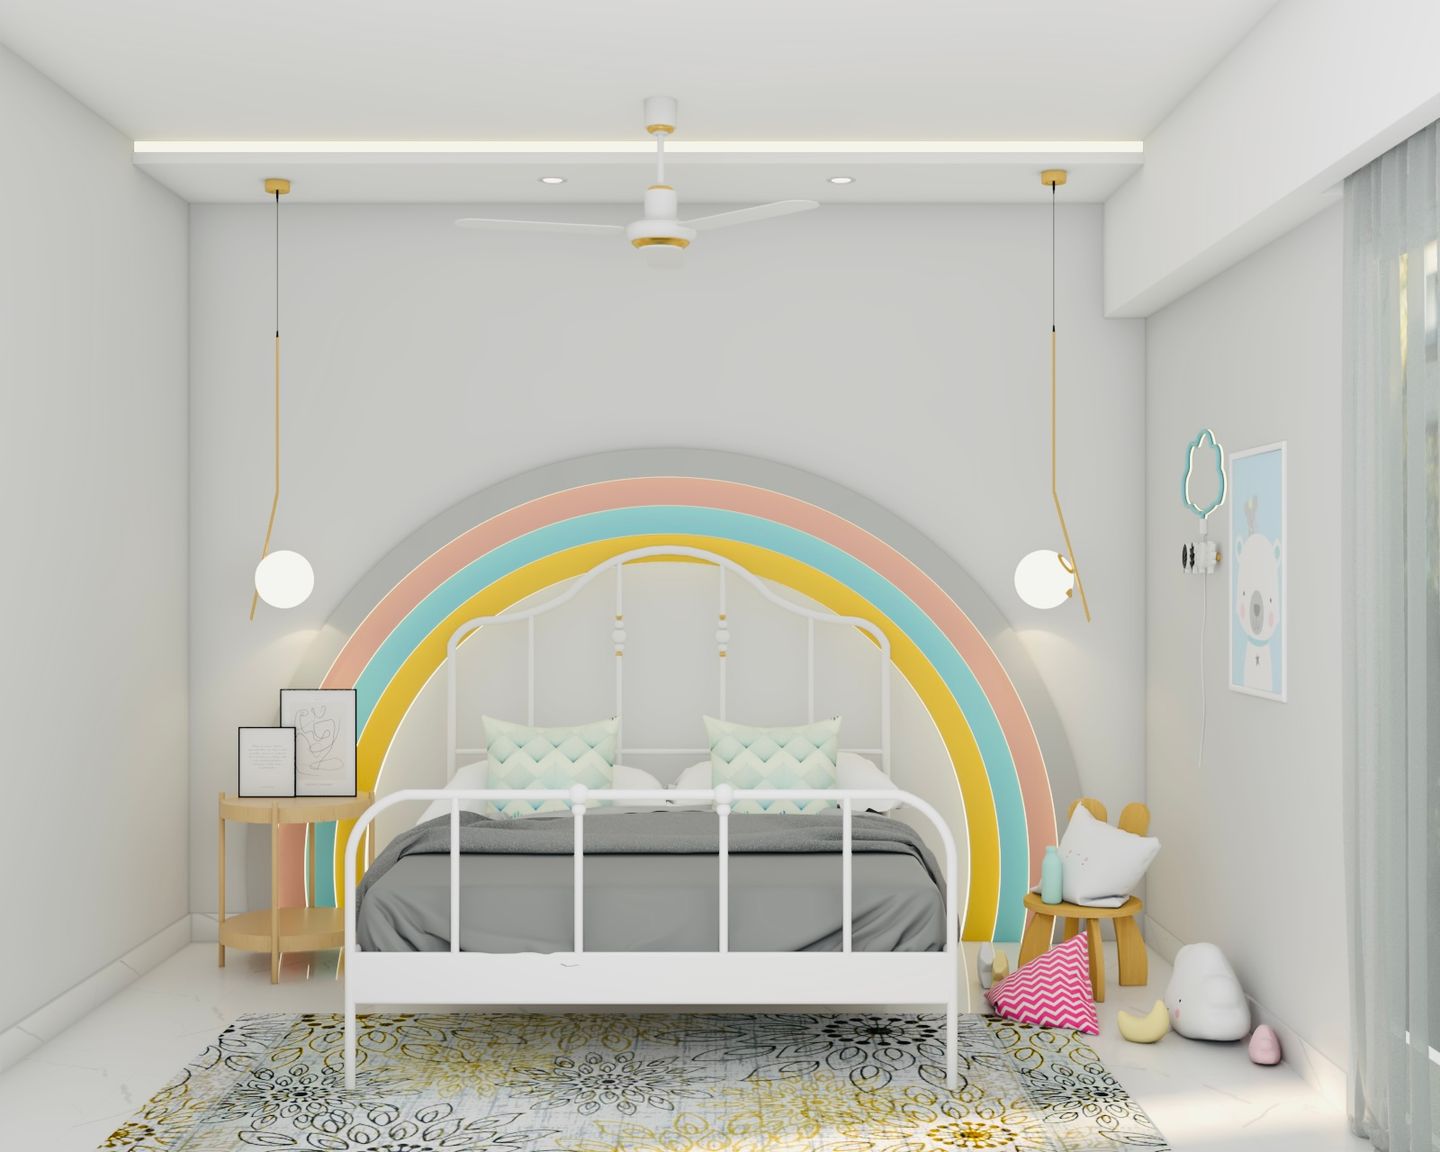 Kid's Bedroom With Rainbow-Themed Walls - Livspace